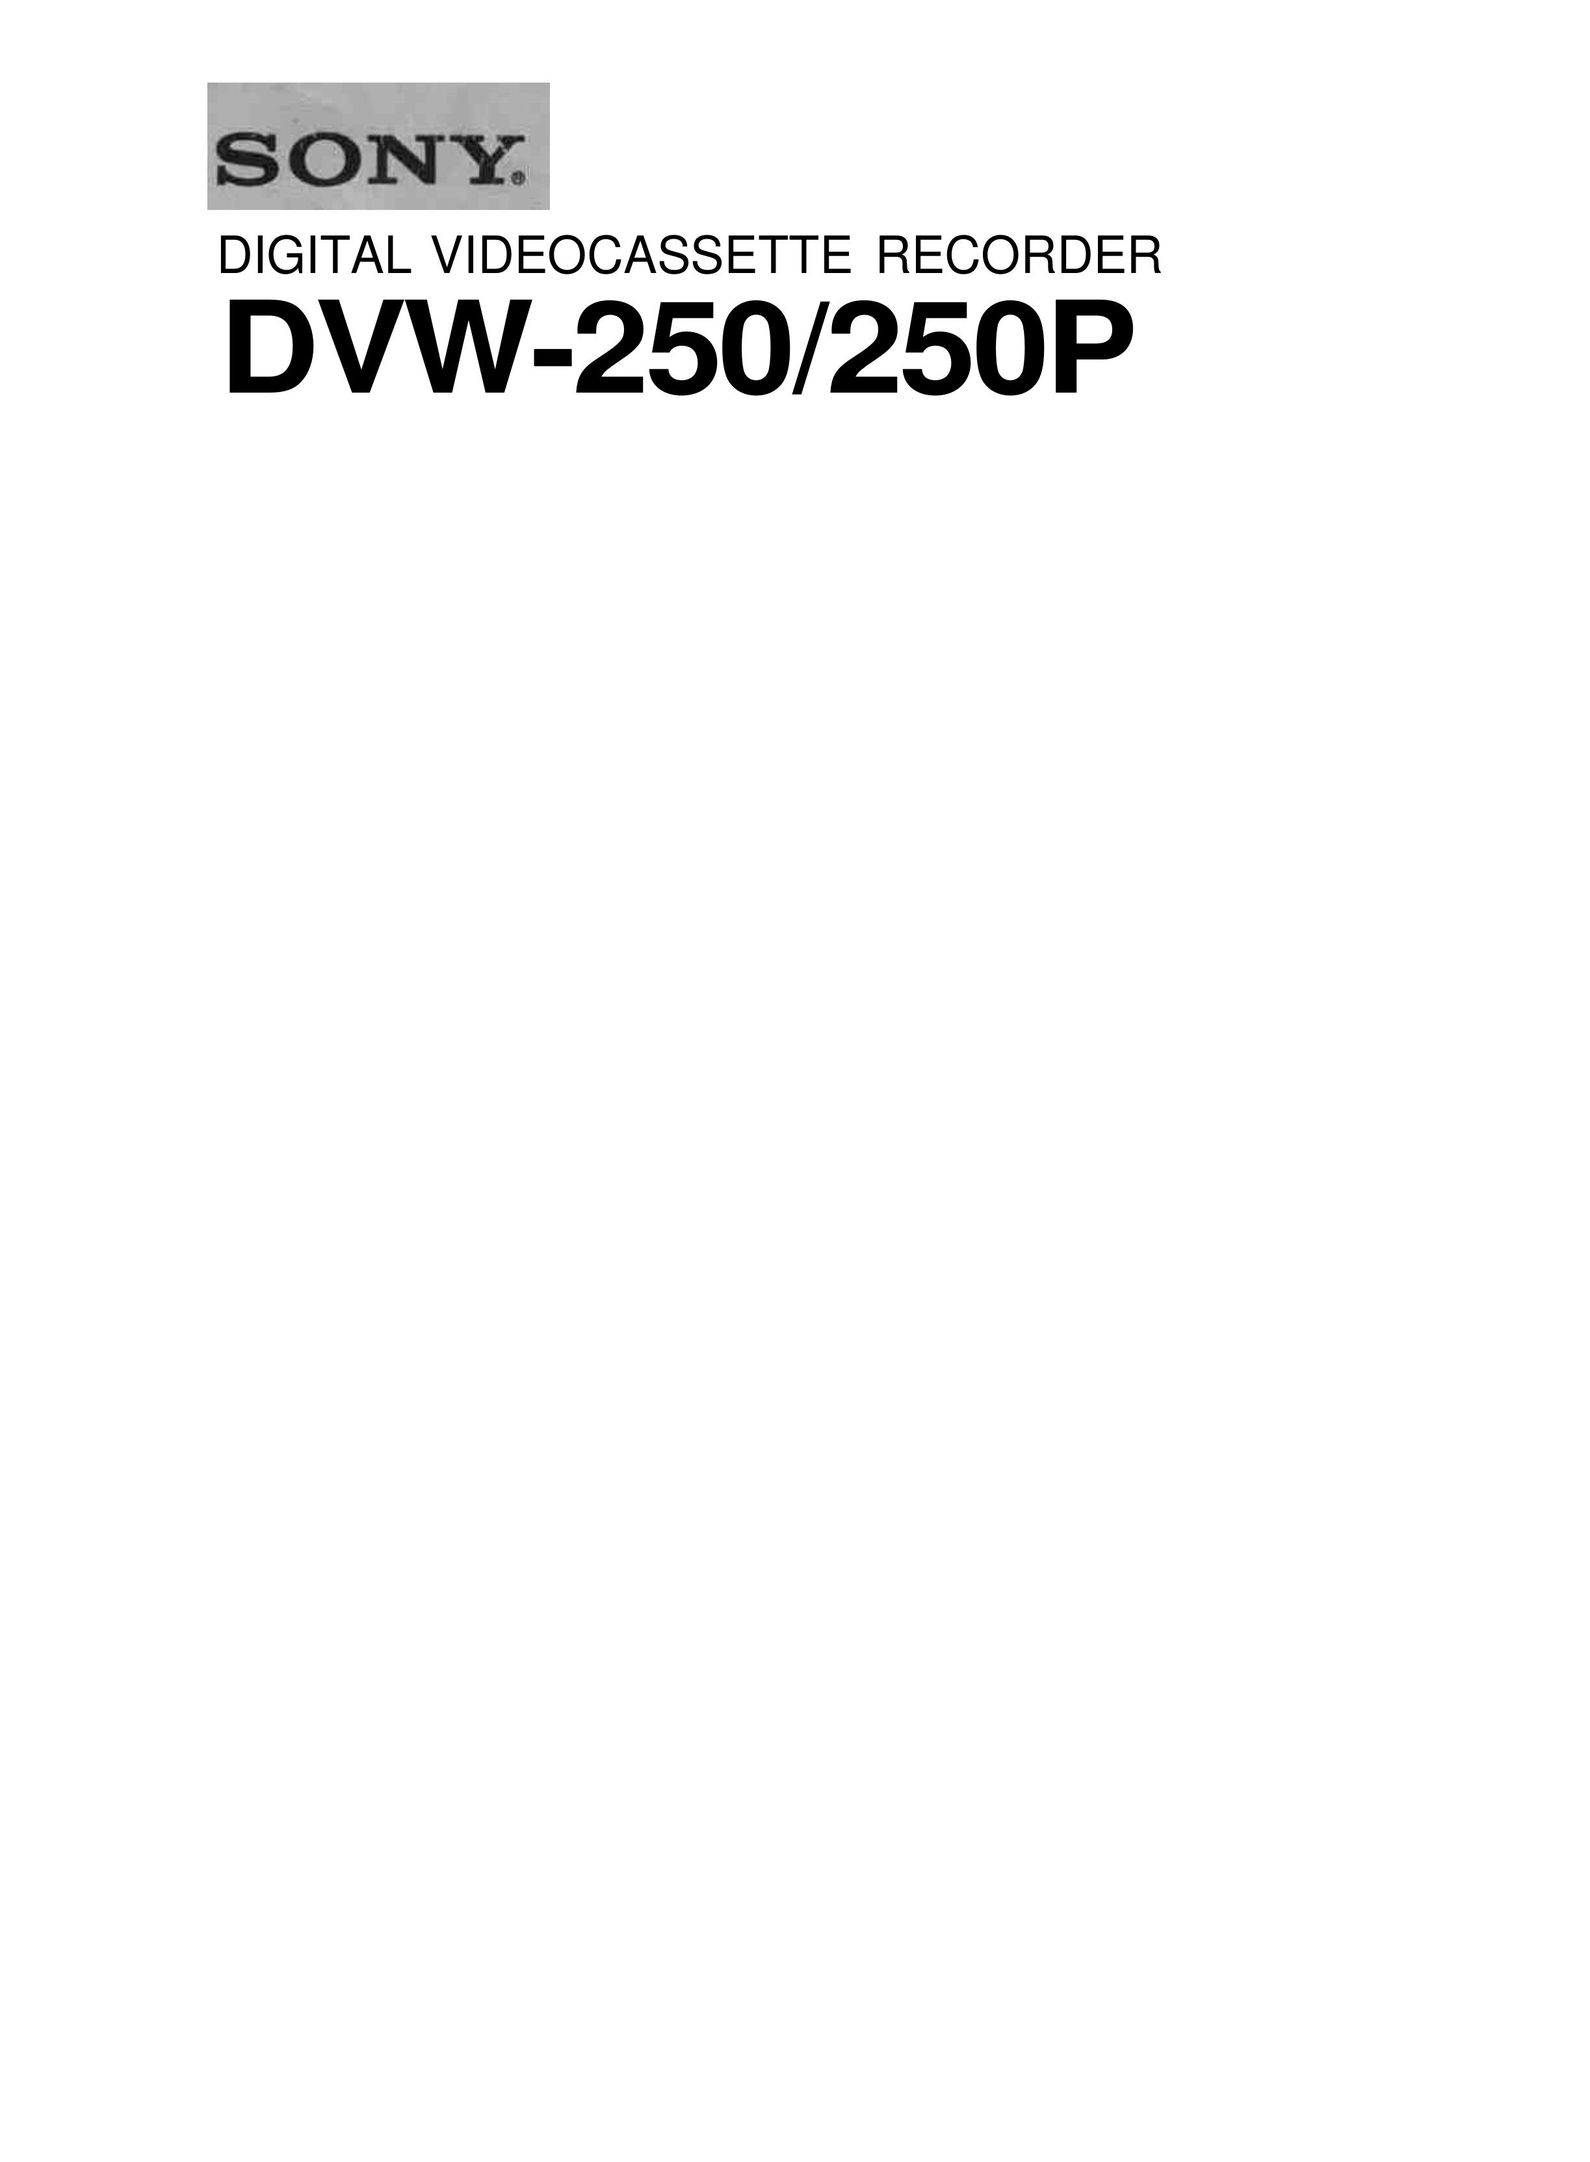 Sony DVW-250 VCR User Manual